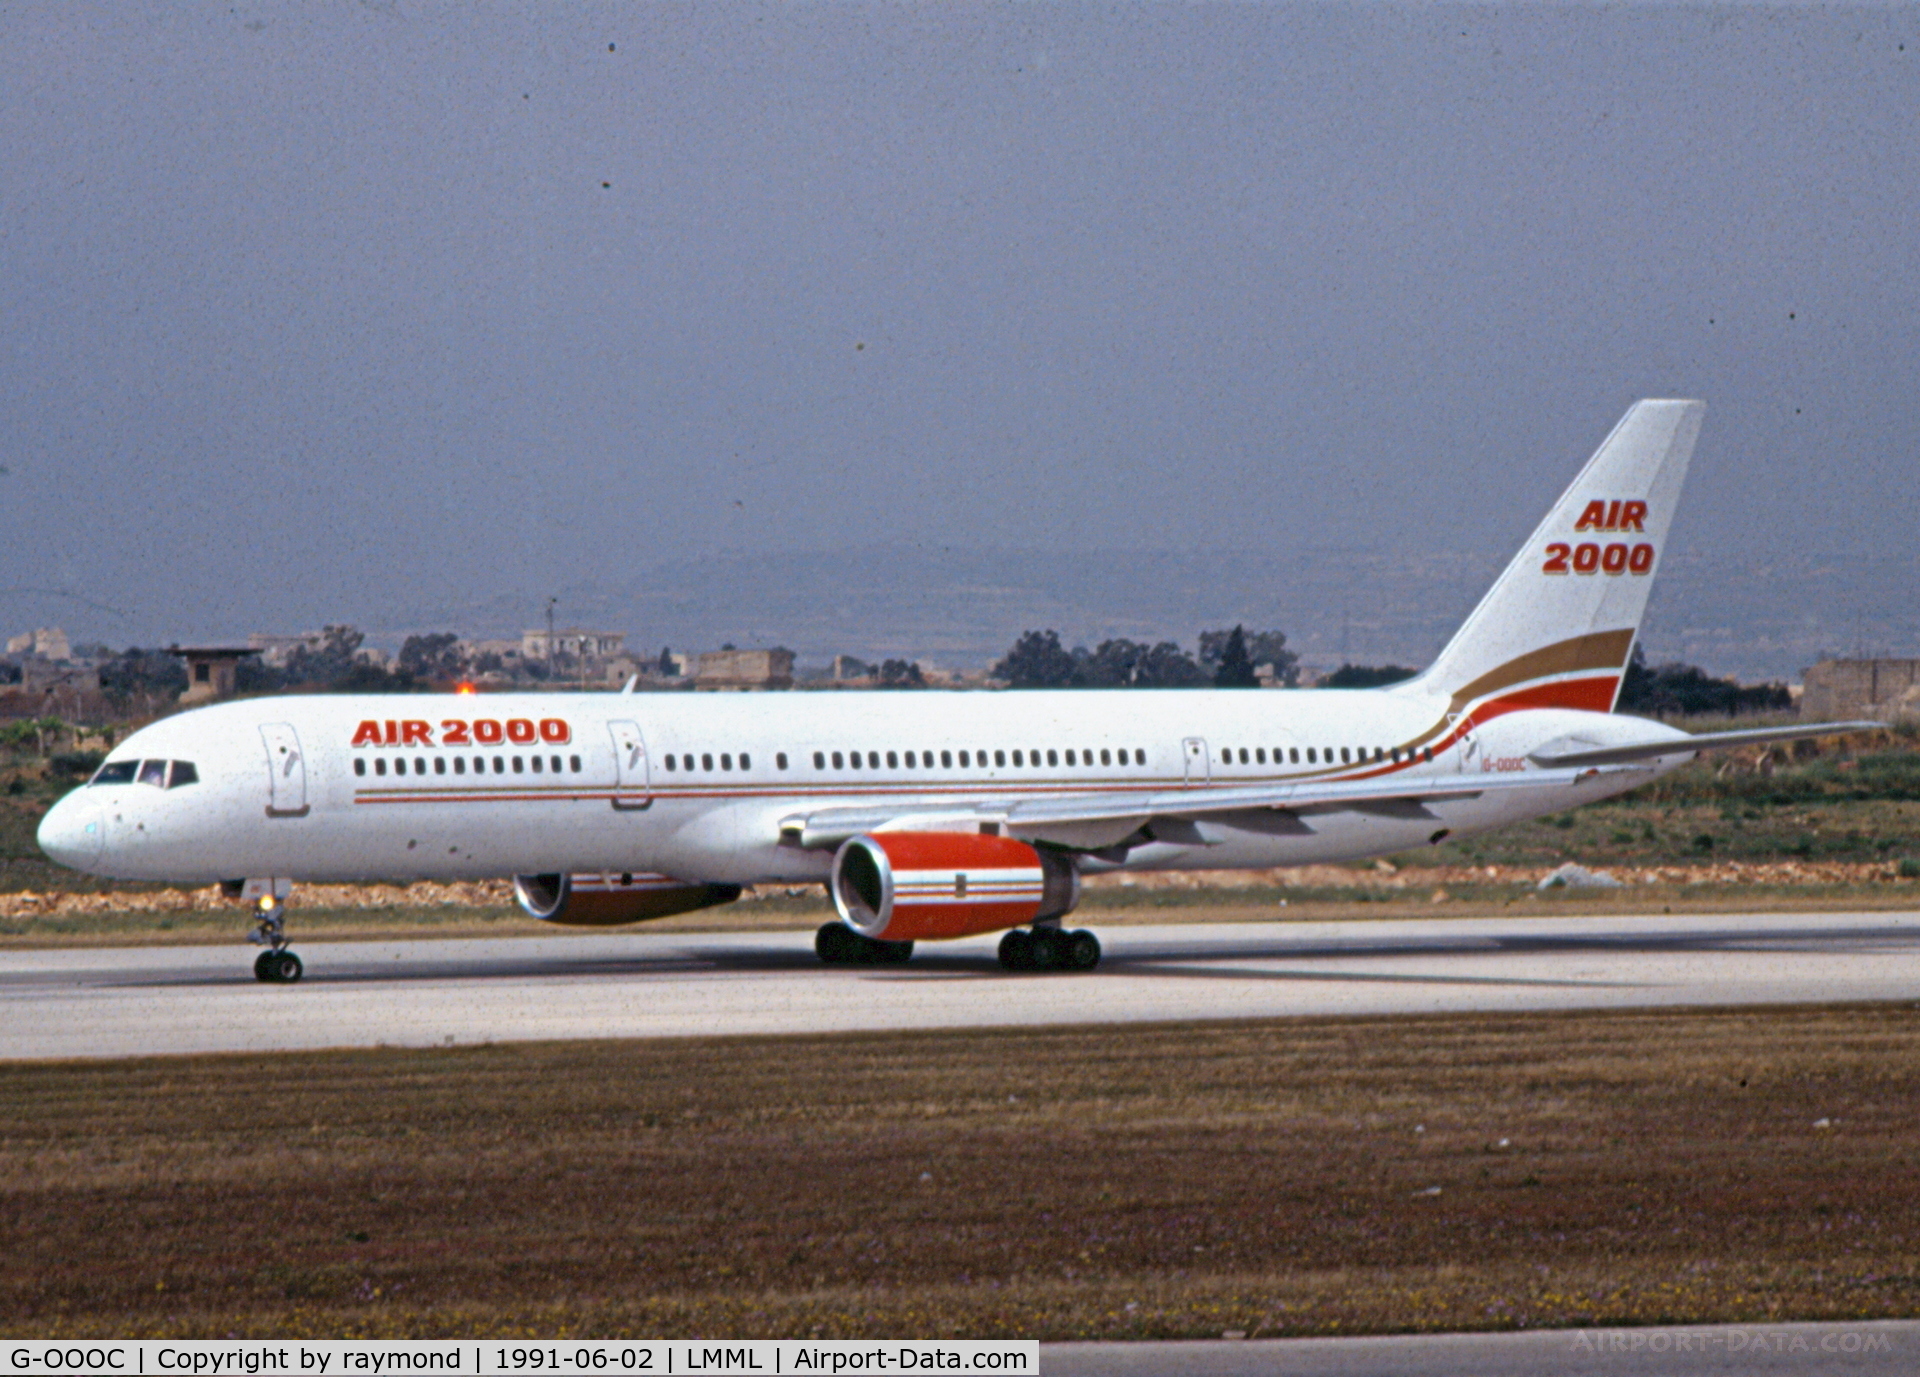 G-OOOC, 1988 Boeing 757-28A C/N 24017, B757 G-OOOC Air2000 during take-off roll RW14.